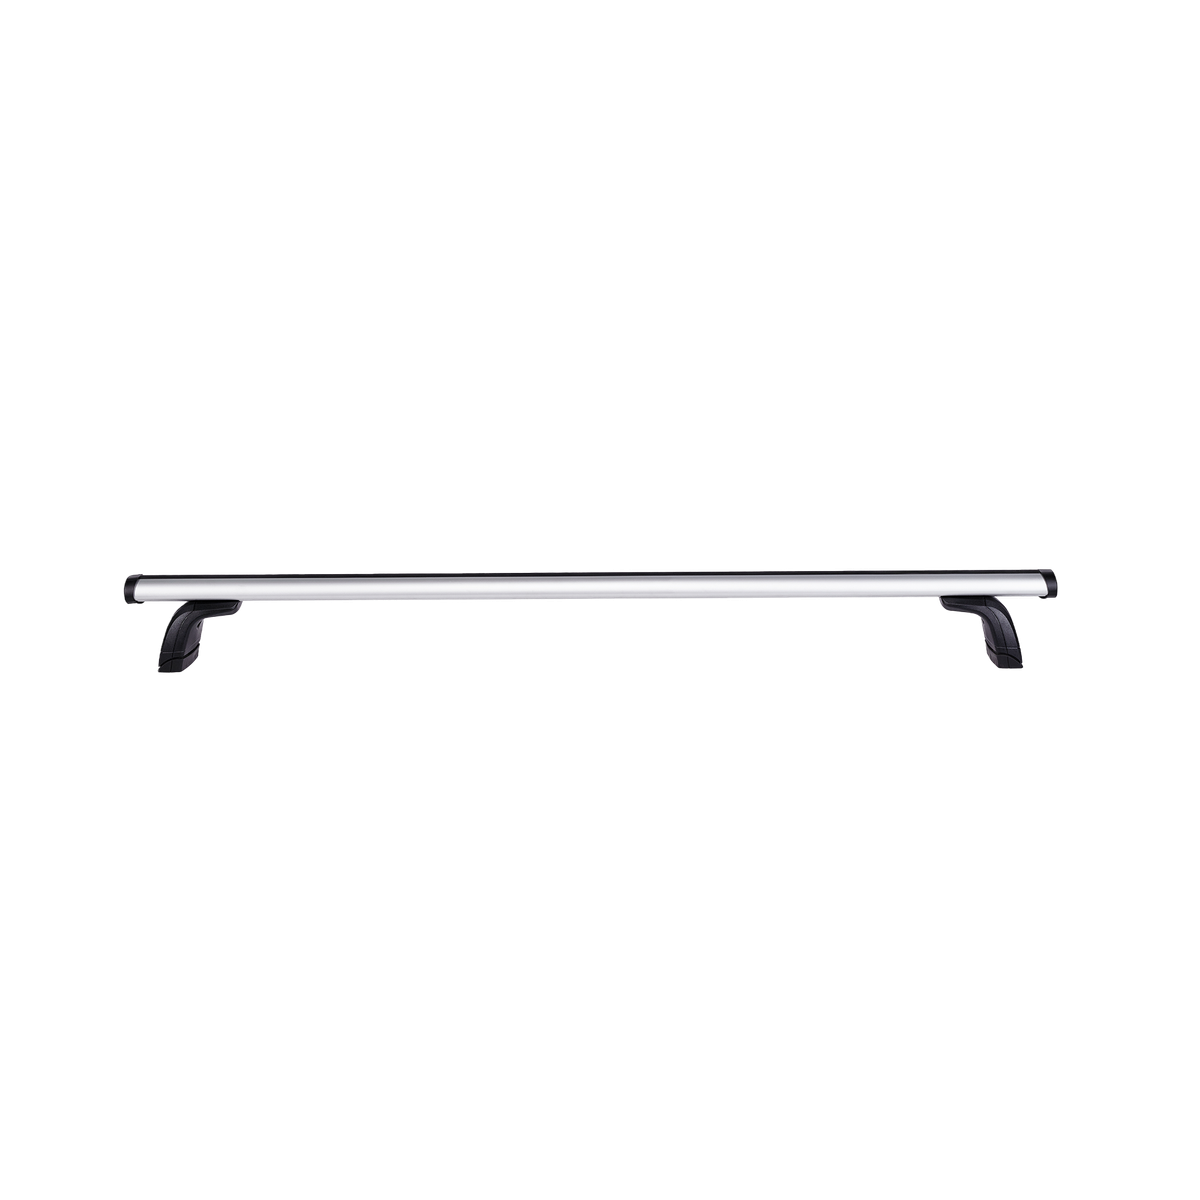 Thule ProBar Flex High van roof rack load bar aluminium